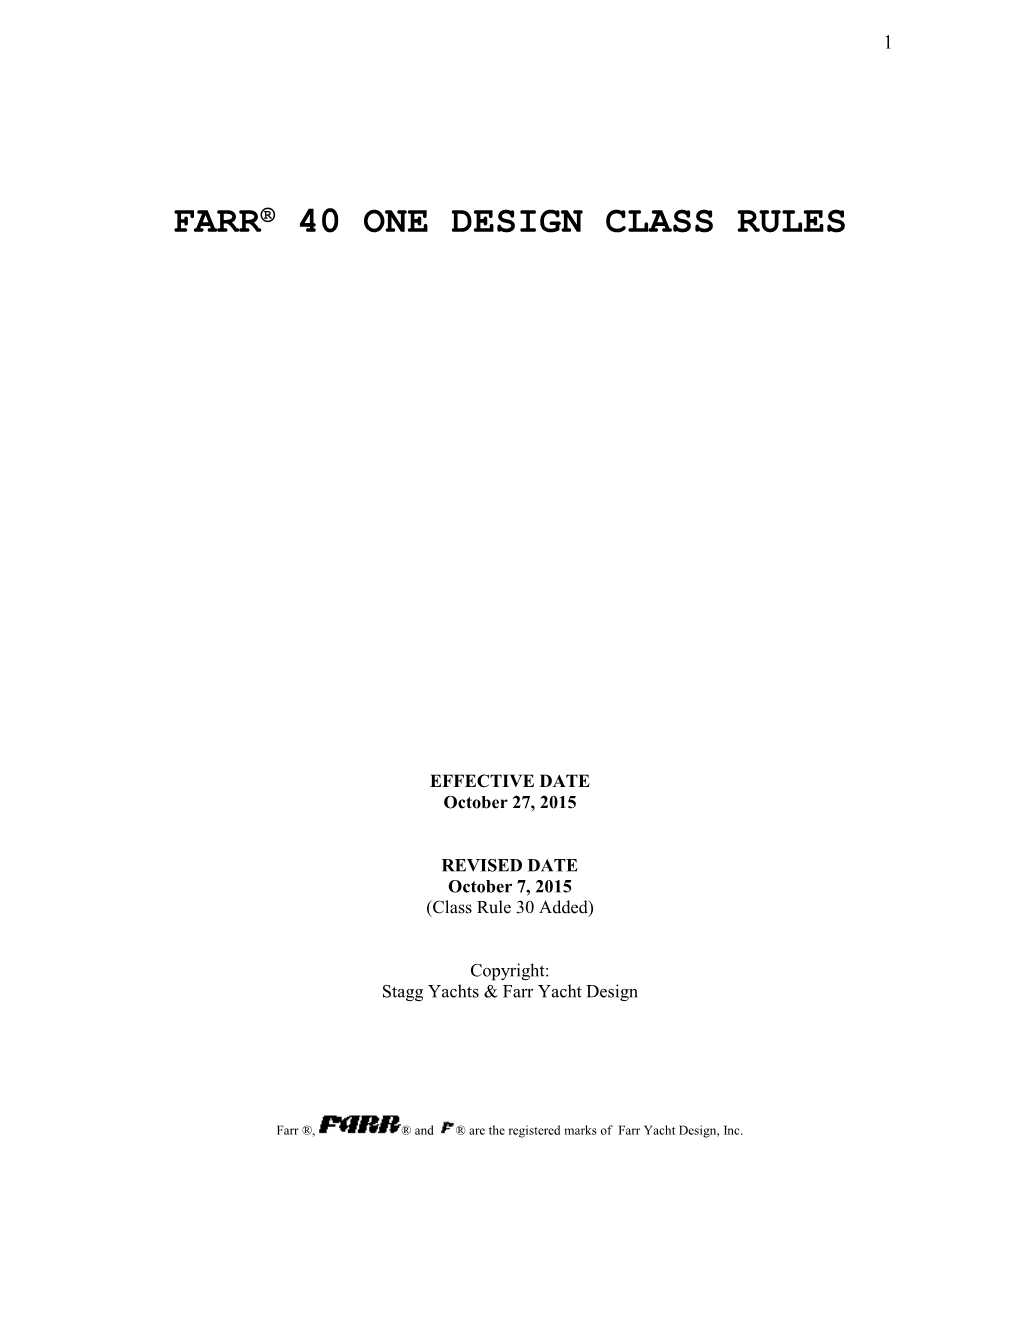 Farr® 40 One Design Class Rules